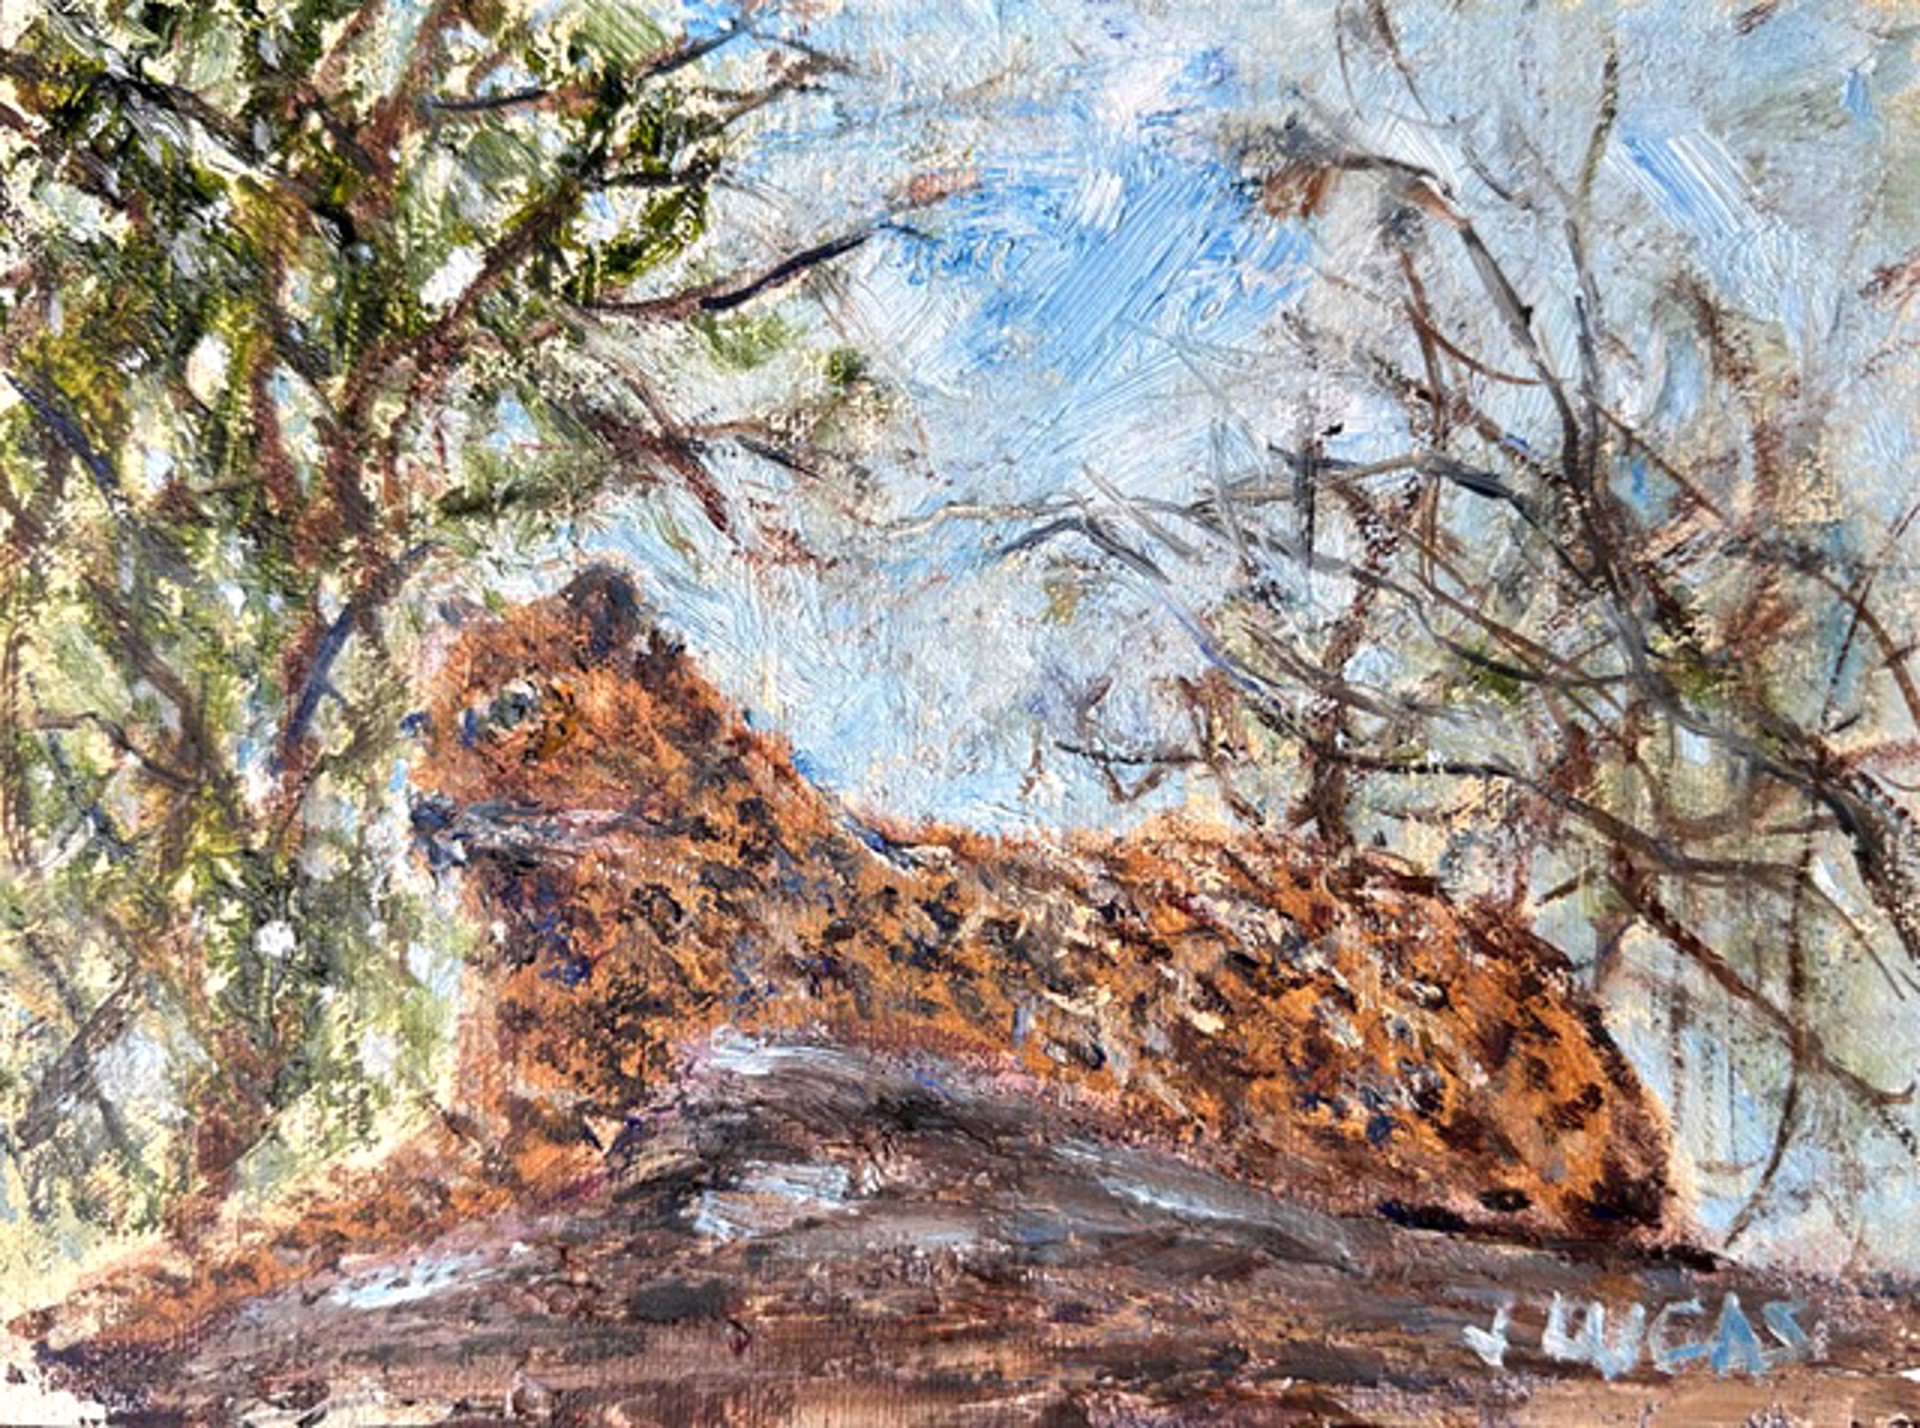 Leopard by Janet Lucas Beck